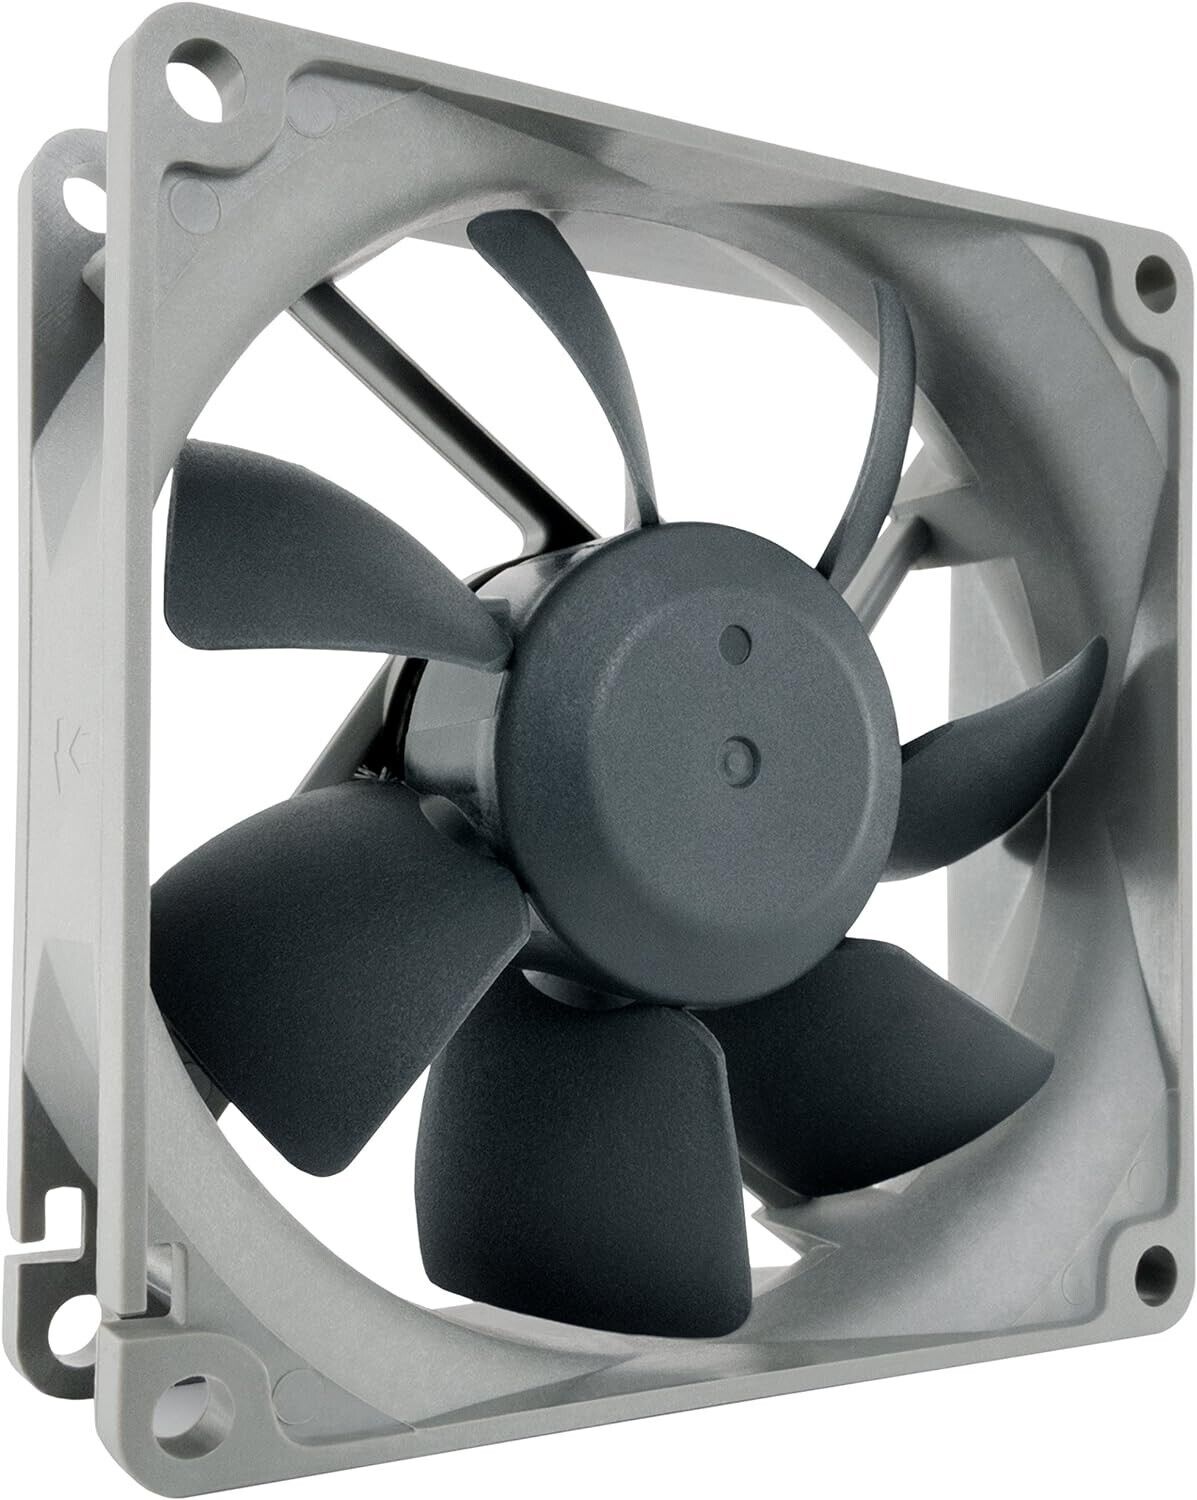 Noctua NF-R8 redux-1800 PWM, High Performance Cooling Fan, 4-Pin, 1800 RPM (80mm